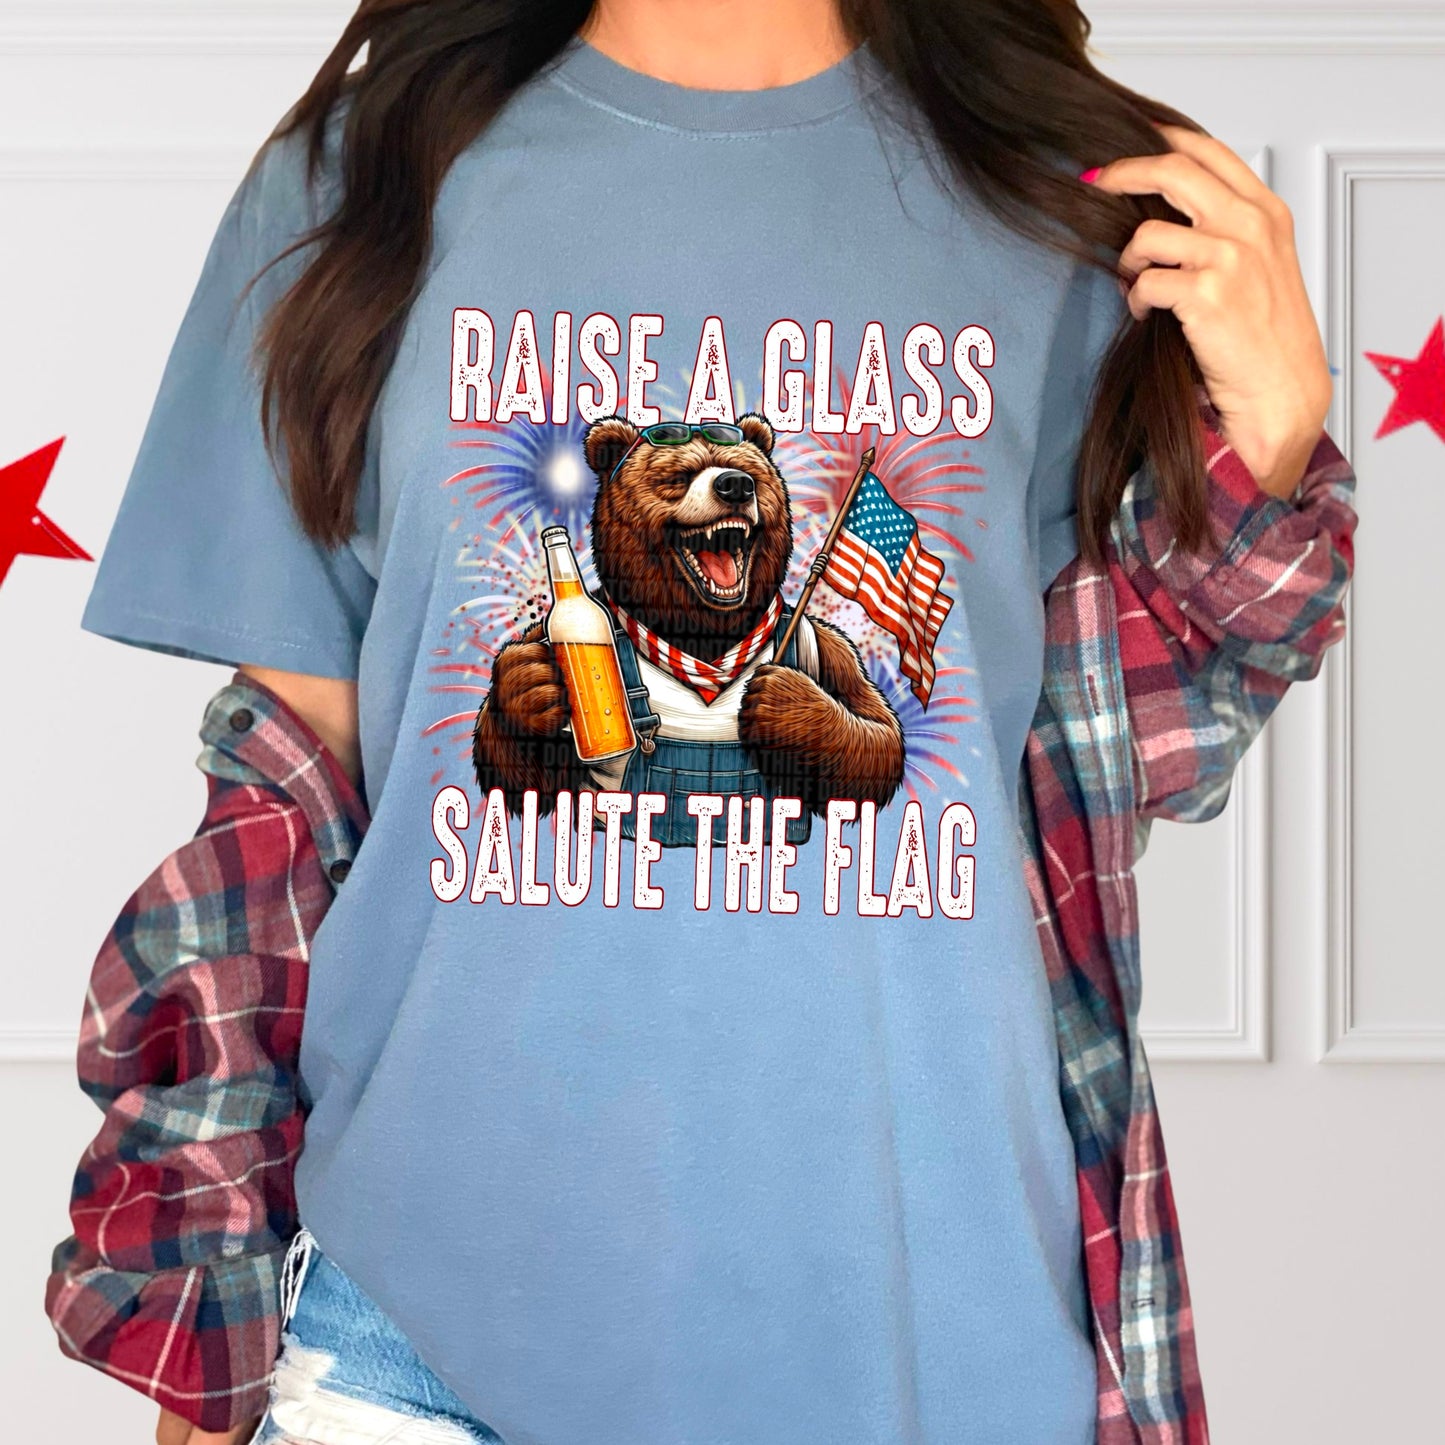 Raise A Glass Salute The Flag - Tee